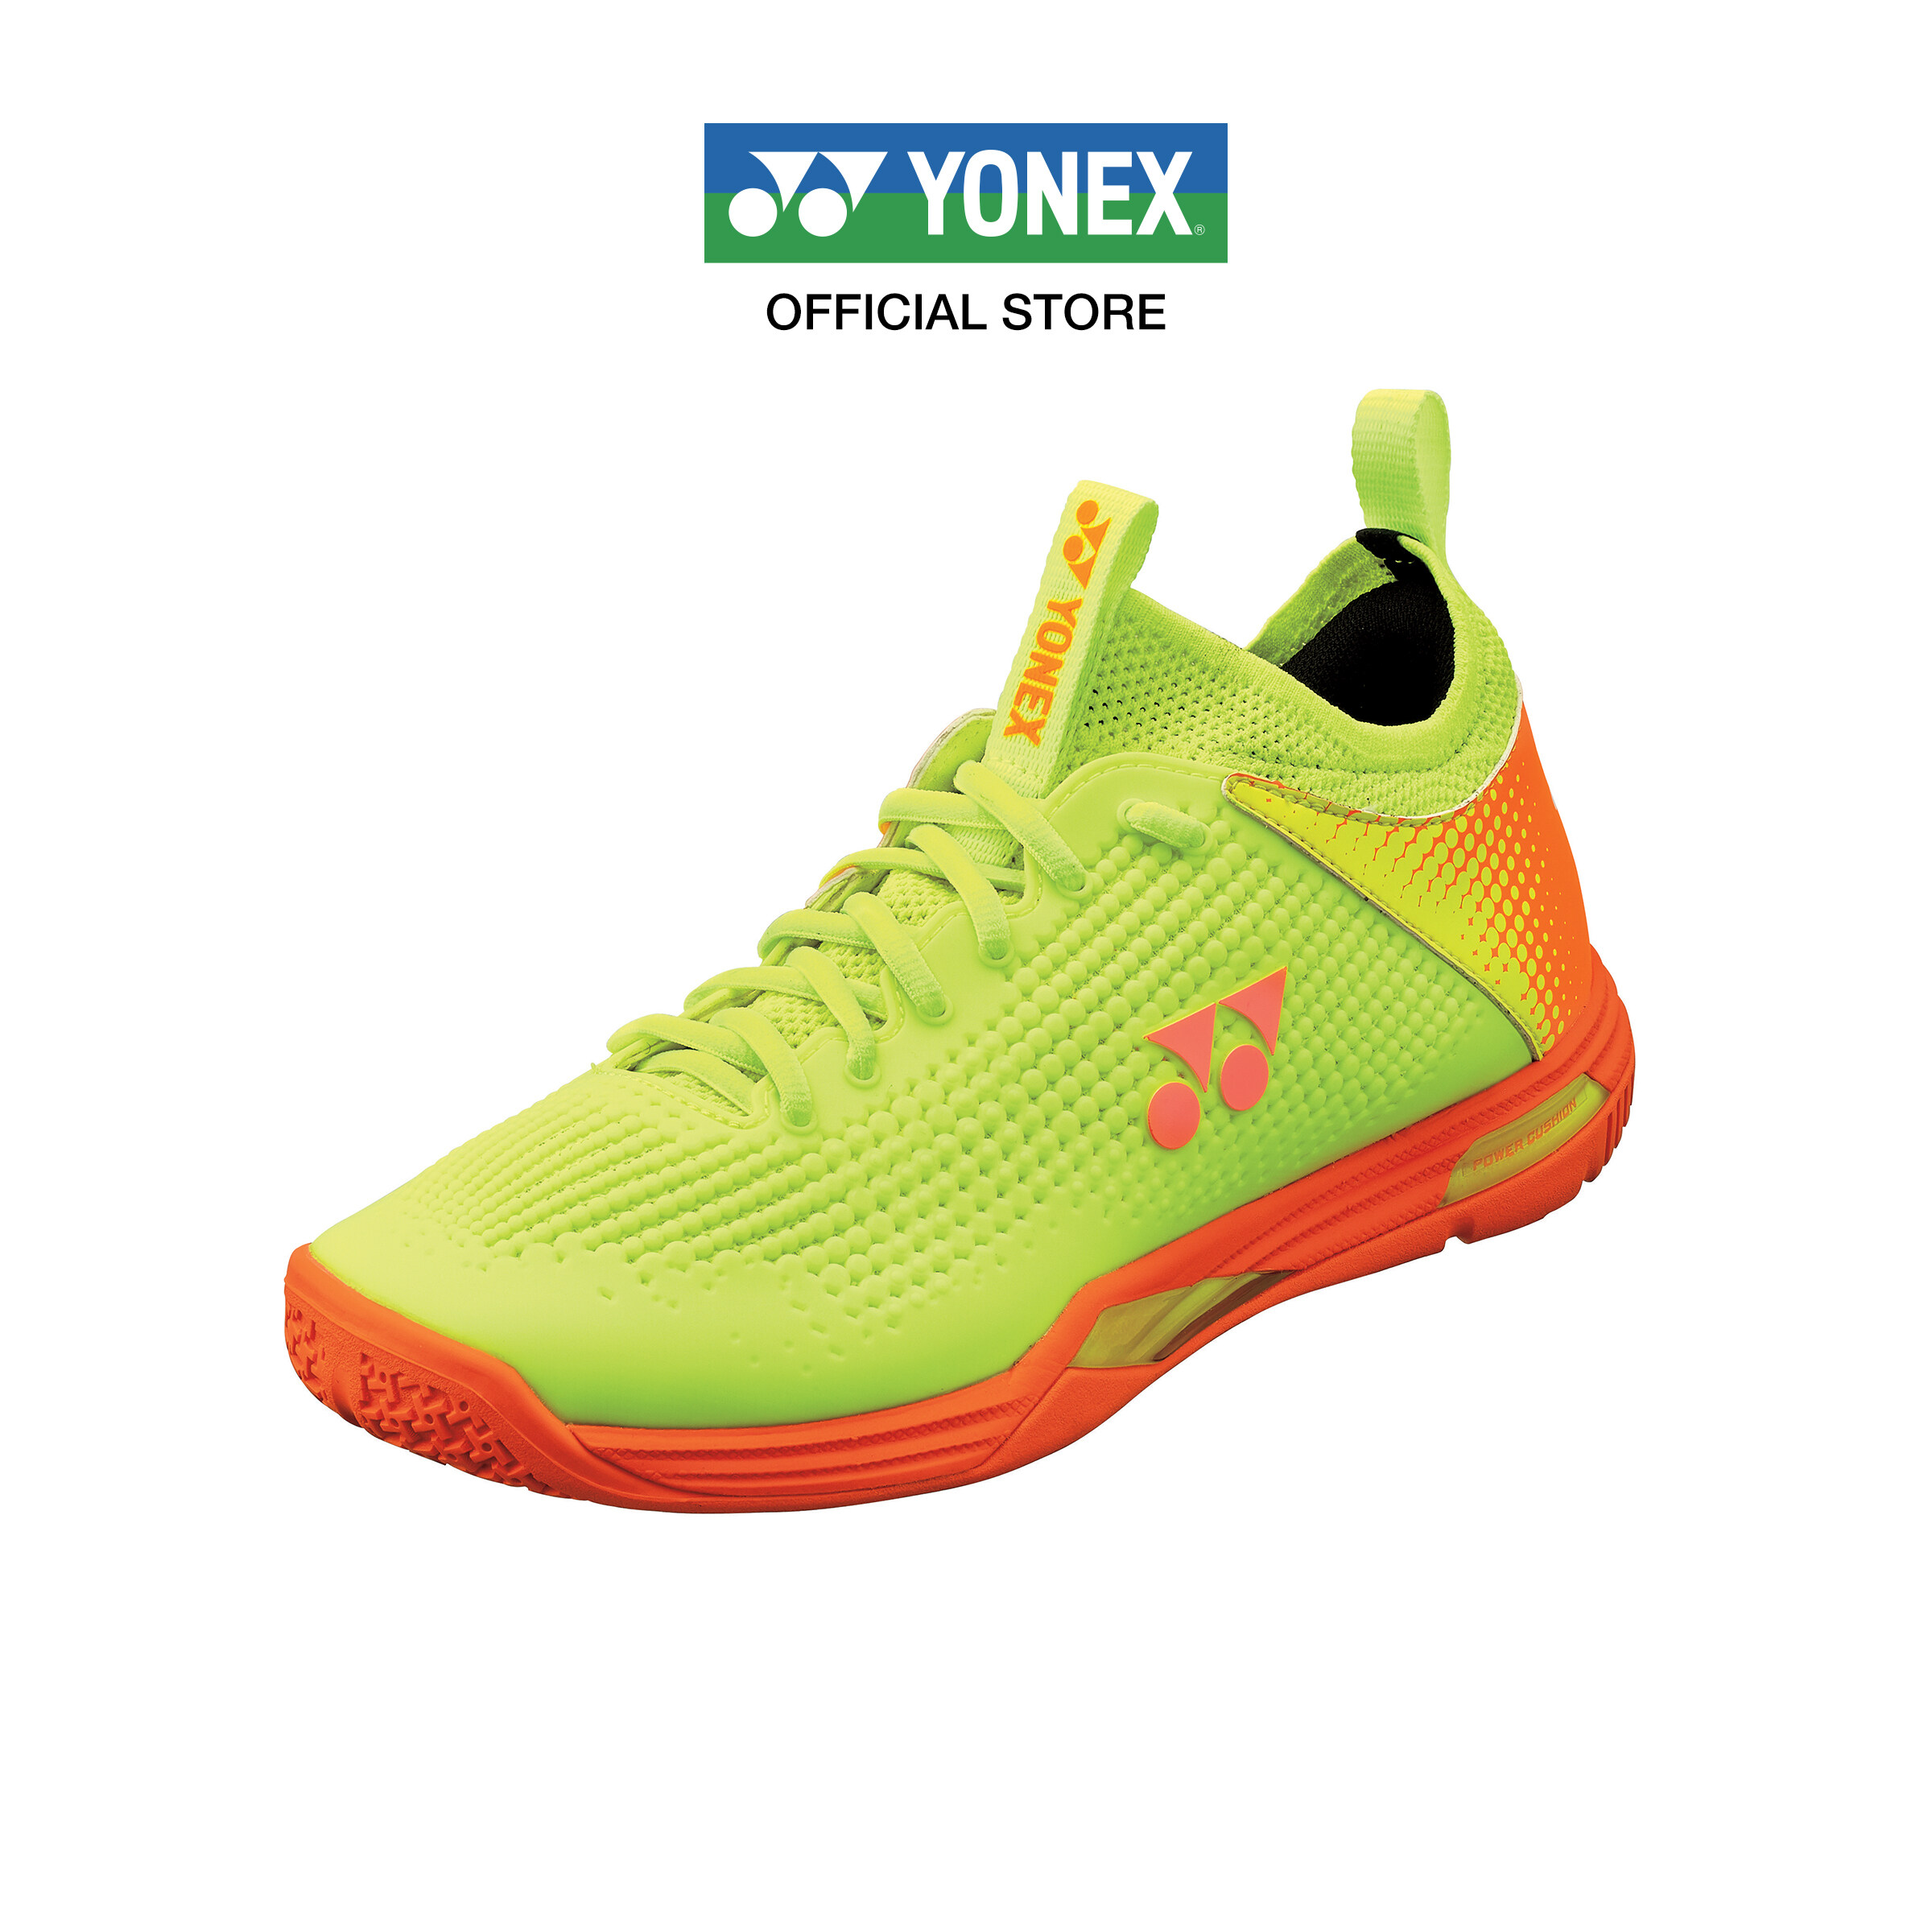 YONEX รองเท้าแบดมินตัน รุ่น POWER CUSHION ECLIPSION Z 2 WIDE (SHBELSW) รองเท้าแบดมินตันรุ่นใหม่สาย Stability ช่วยให้คุณเกาะติดคอร์ทอย่างมั่นคง ทรงตัวดี